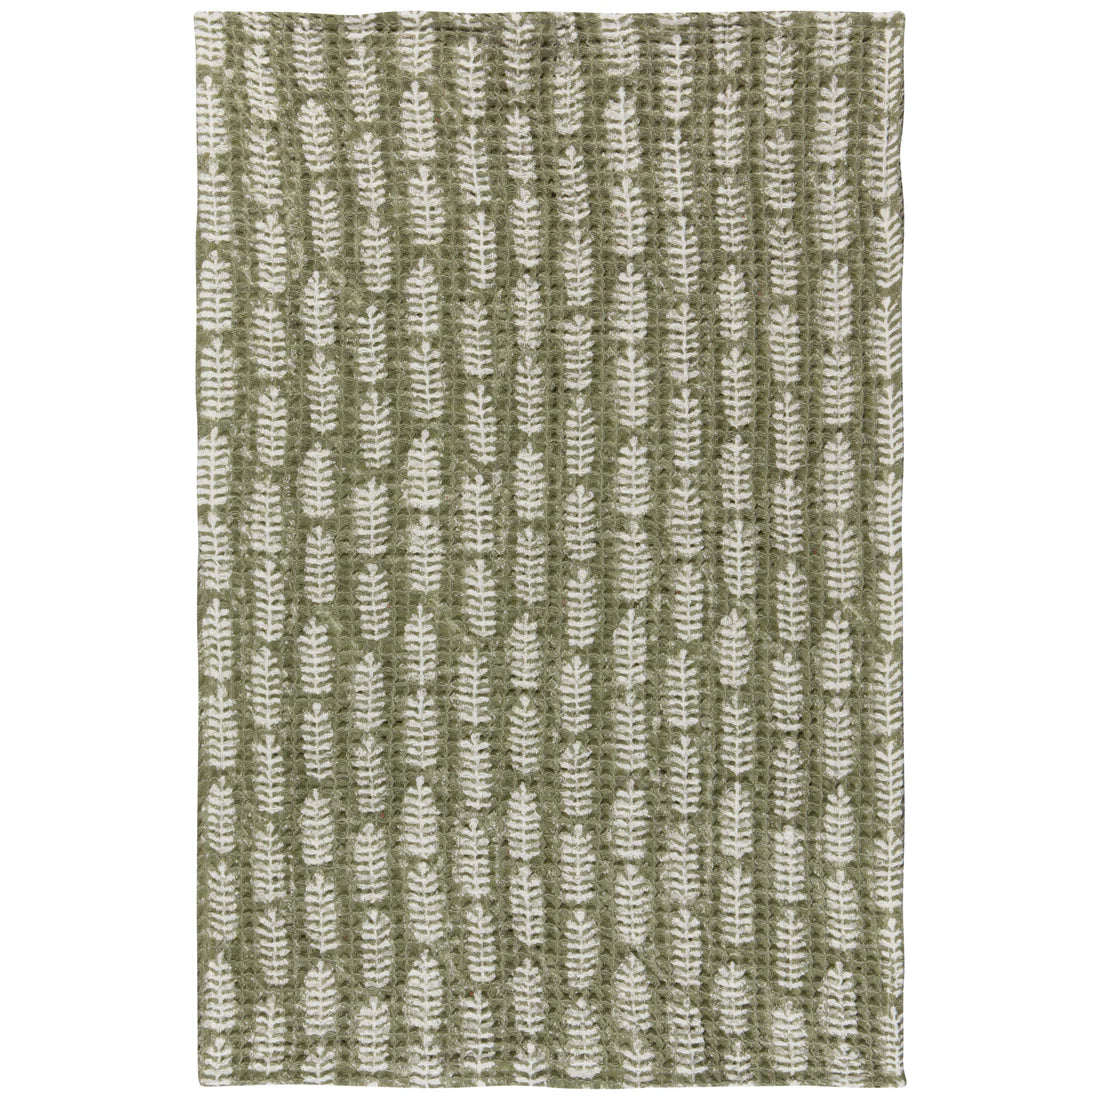 Block Print Fern Tea Towel